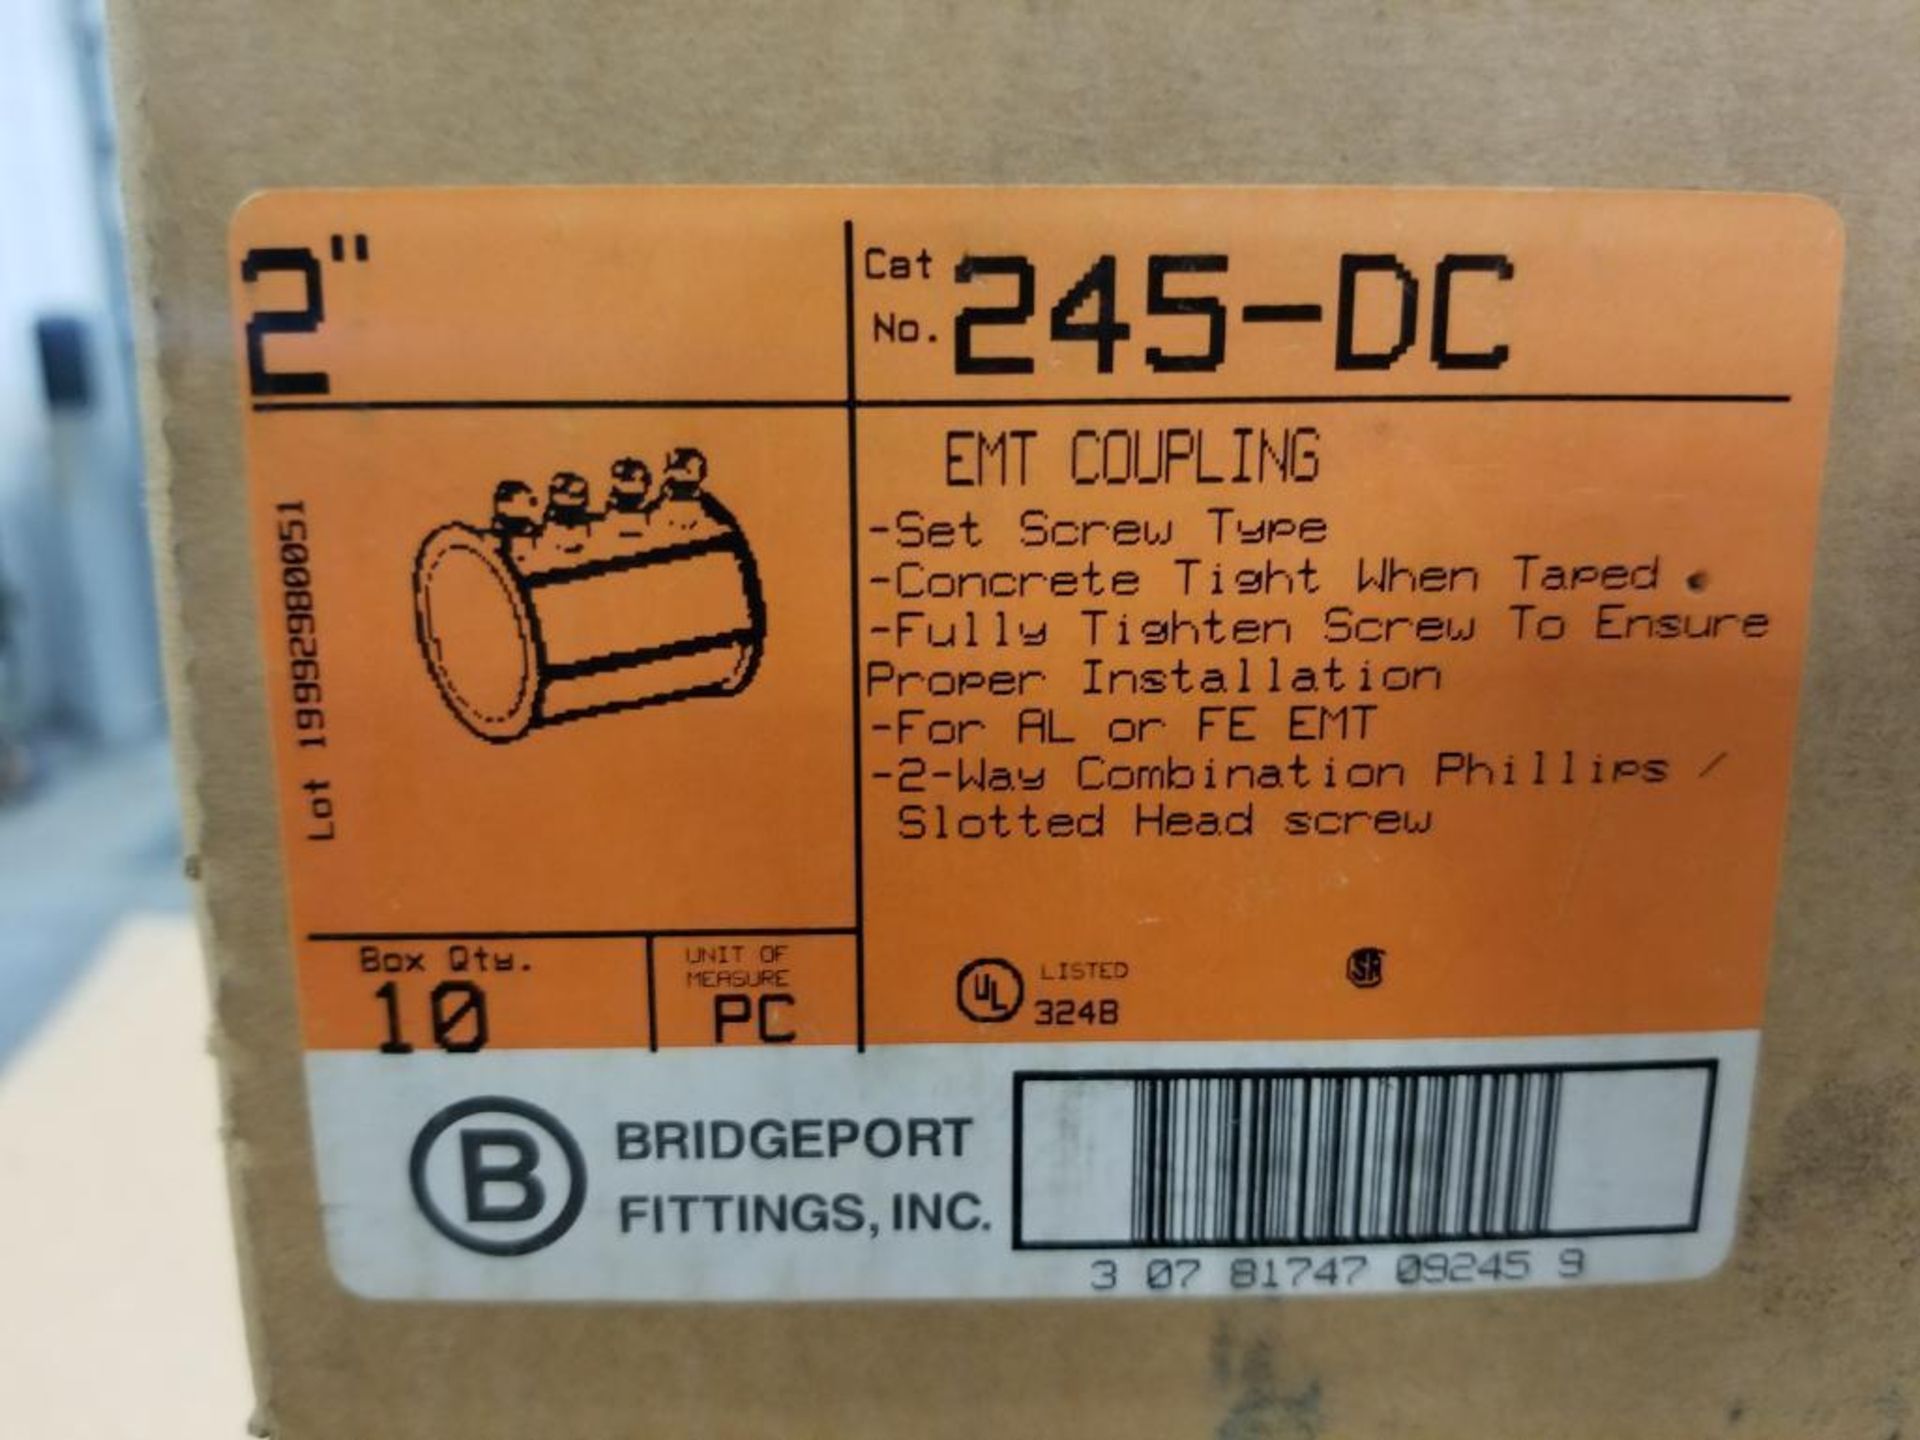 Qty 30 - Bridgeport EMT coupling. Catalog 245-DC. New in bulk box. (3 boxes of 10) - Image 3 of 5